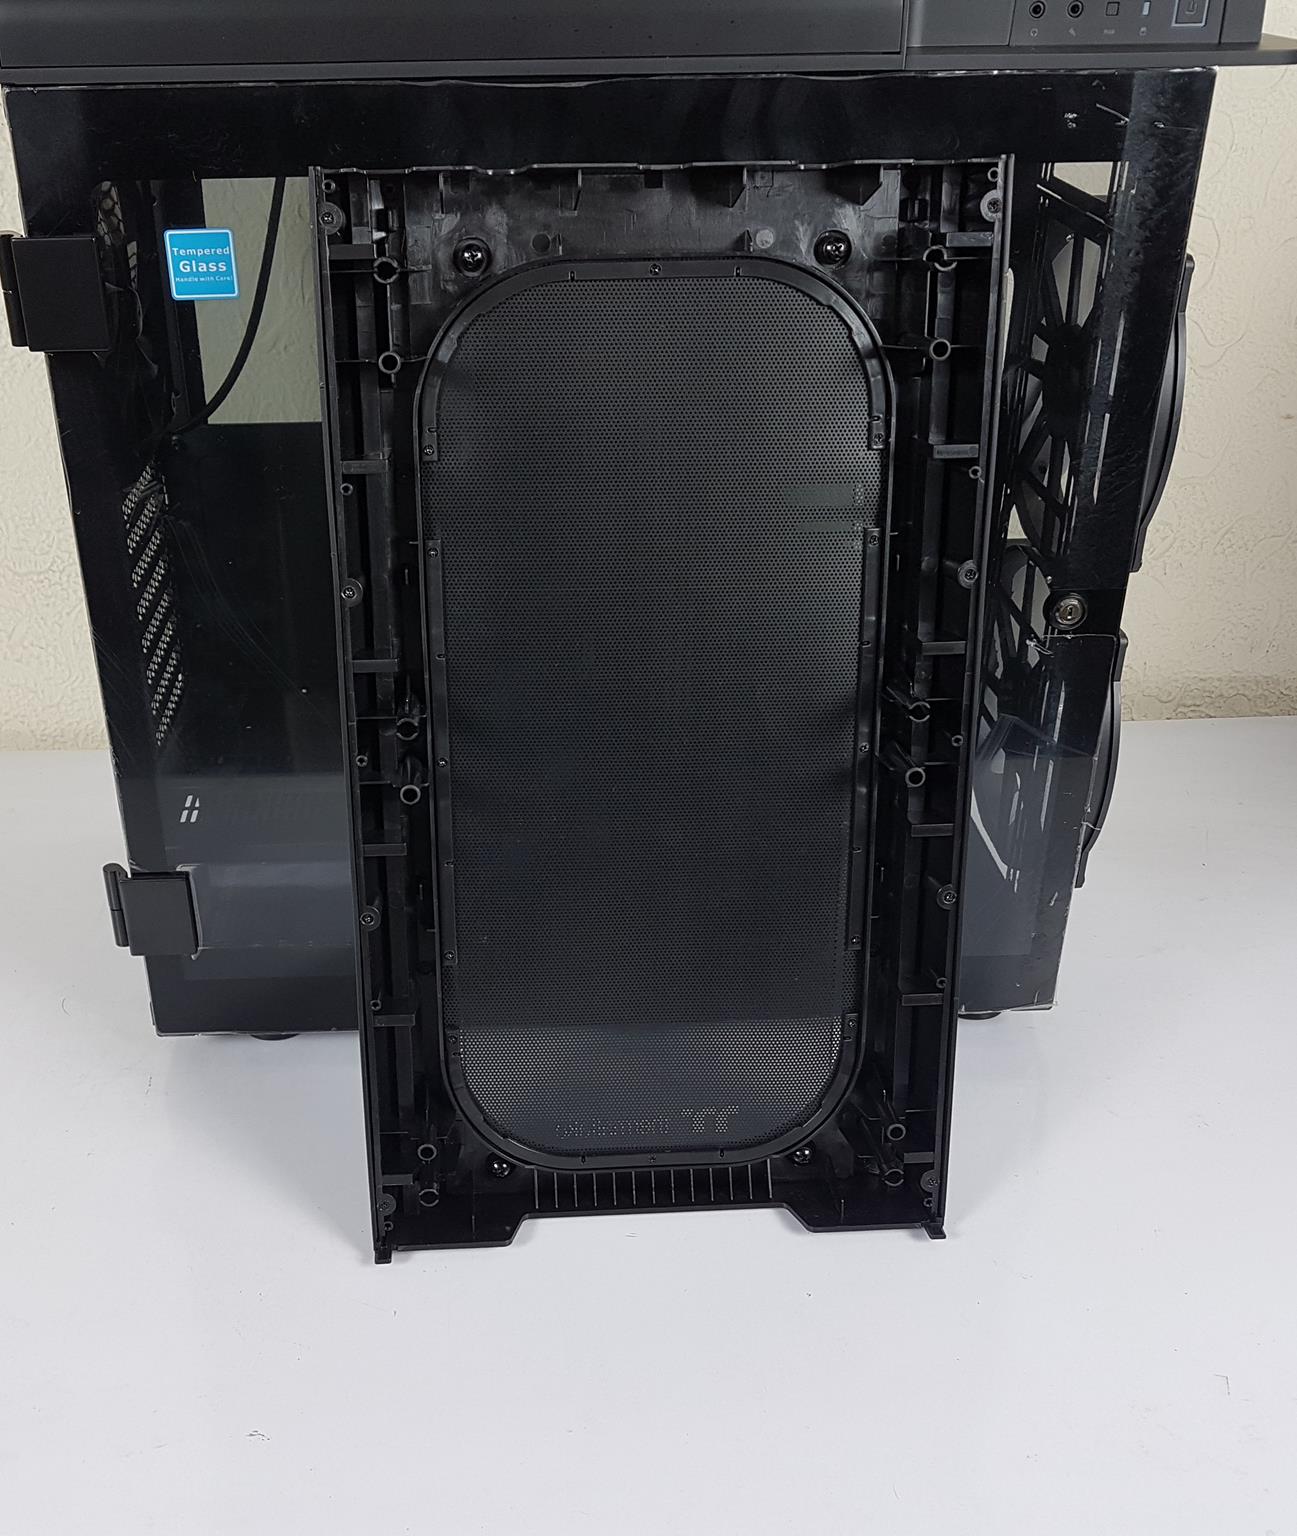 Thermaltake GT Interior broken panel